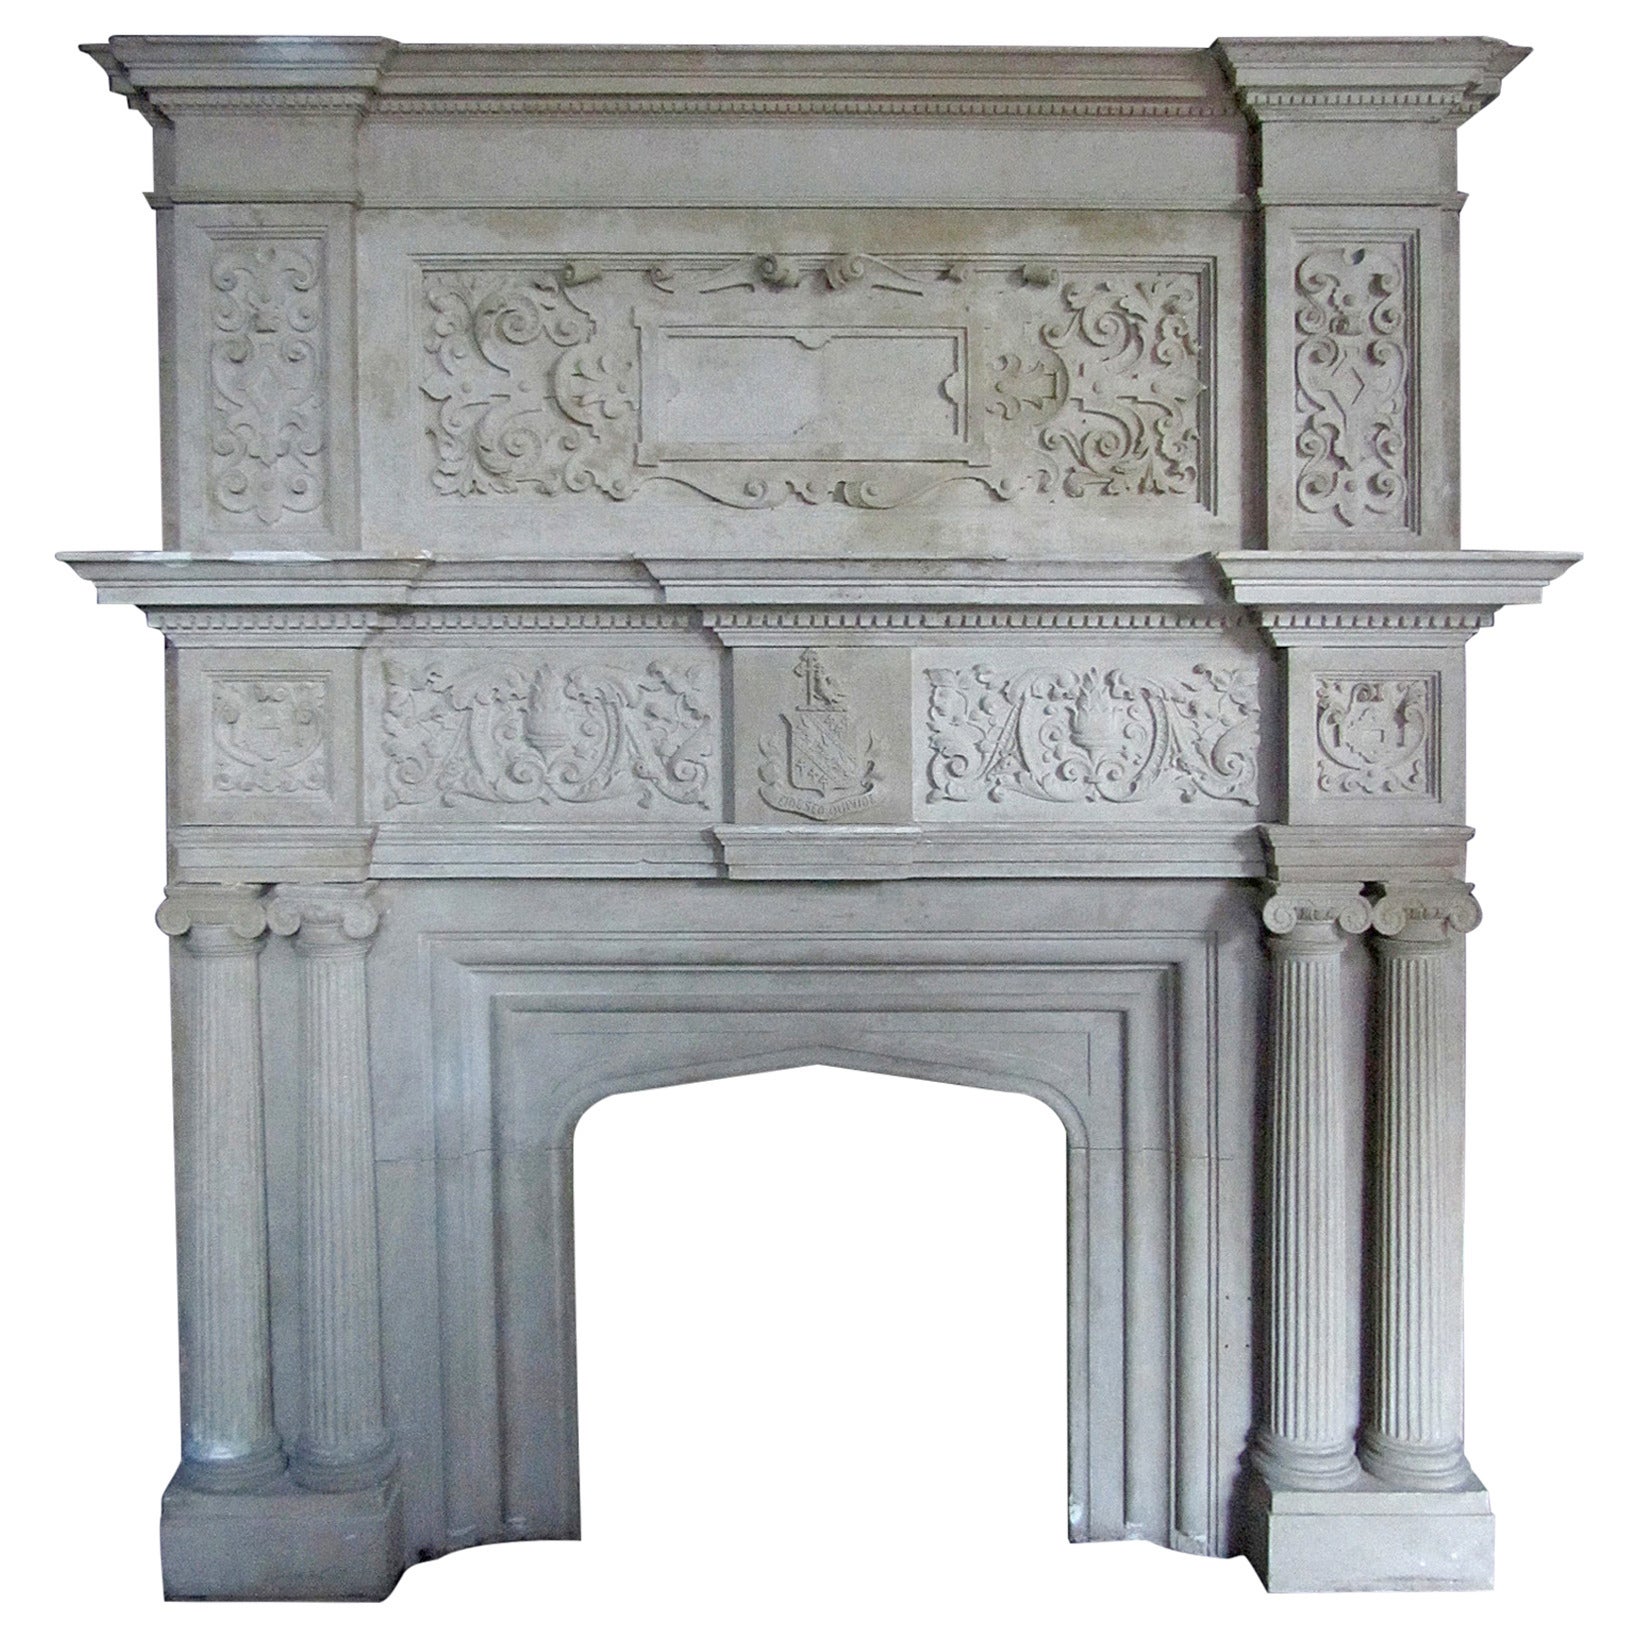 Large Indiana Limestone Tudor Revival Style Fireplace Mantel For Sale